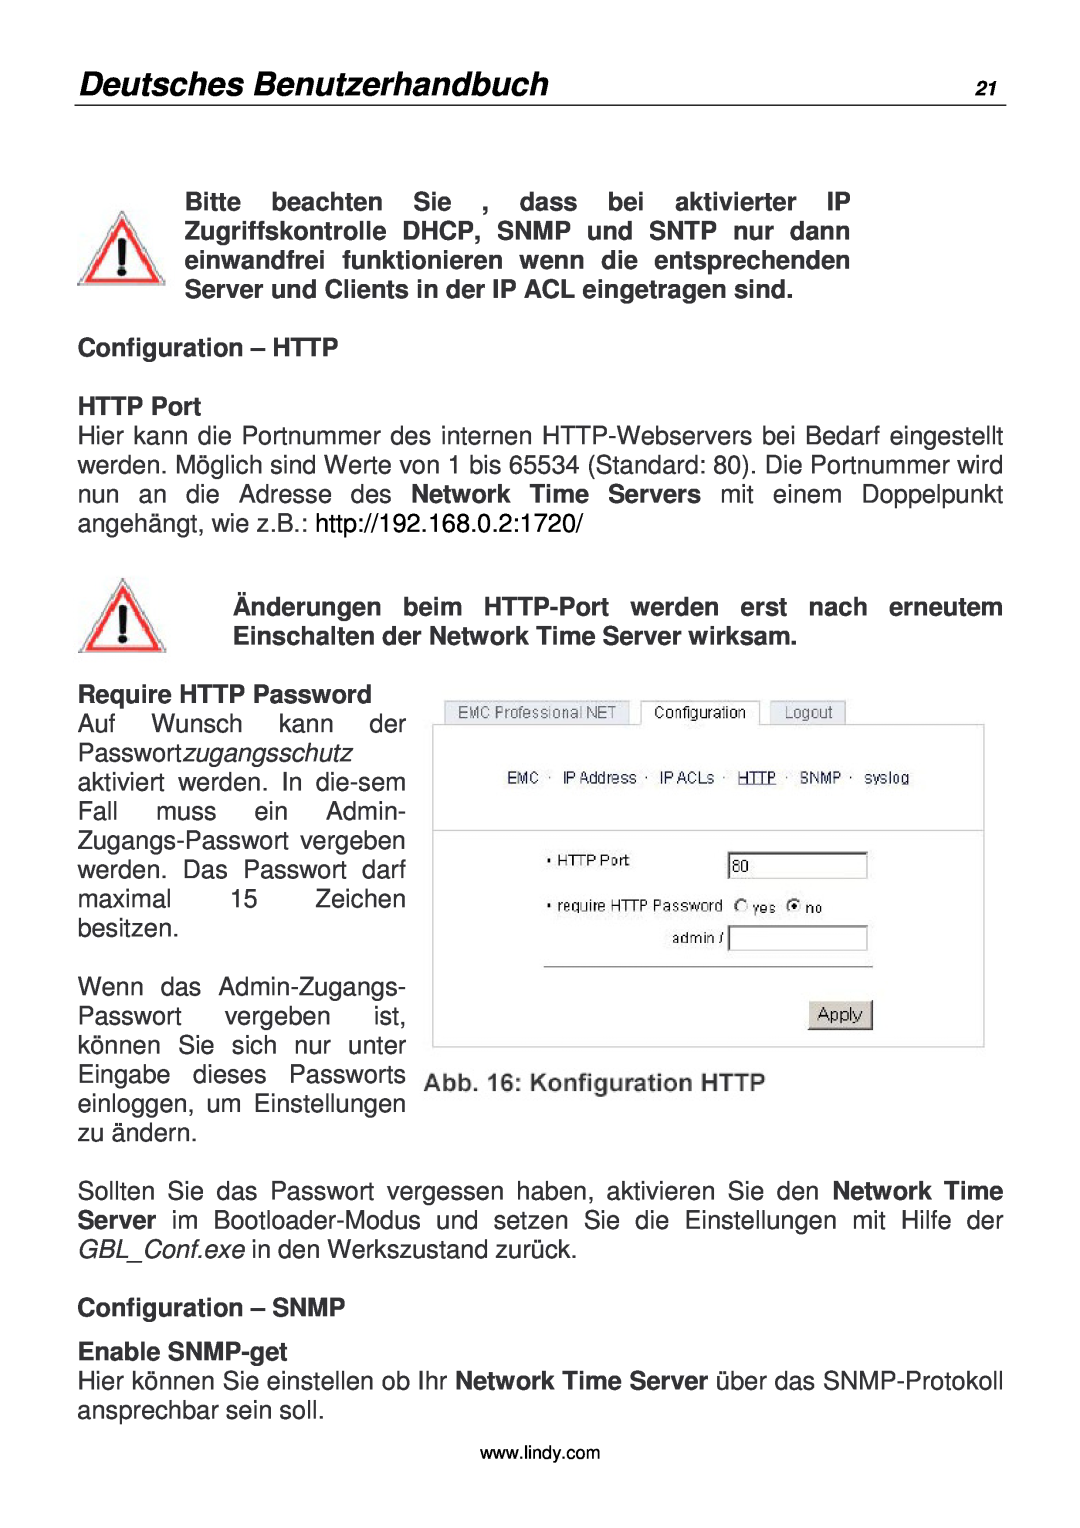 Lindy 20988 manual Deutsches Benutzerhandbuch, Configuration - HTTP HTTP Port, Configuration - SNMP Enable SNMP-get 